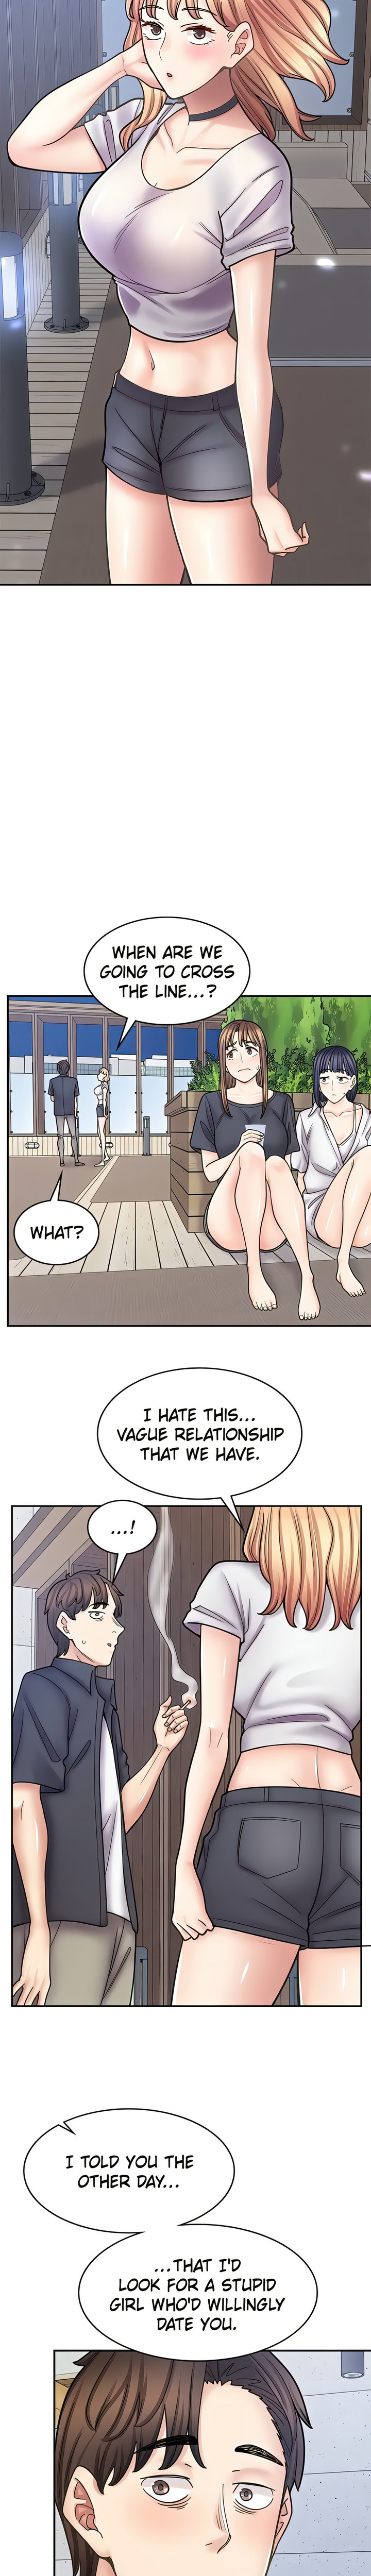 Erotic Manga Café Girls - Chapter 55 Page 3